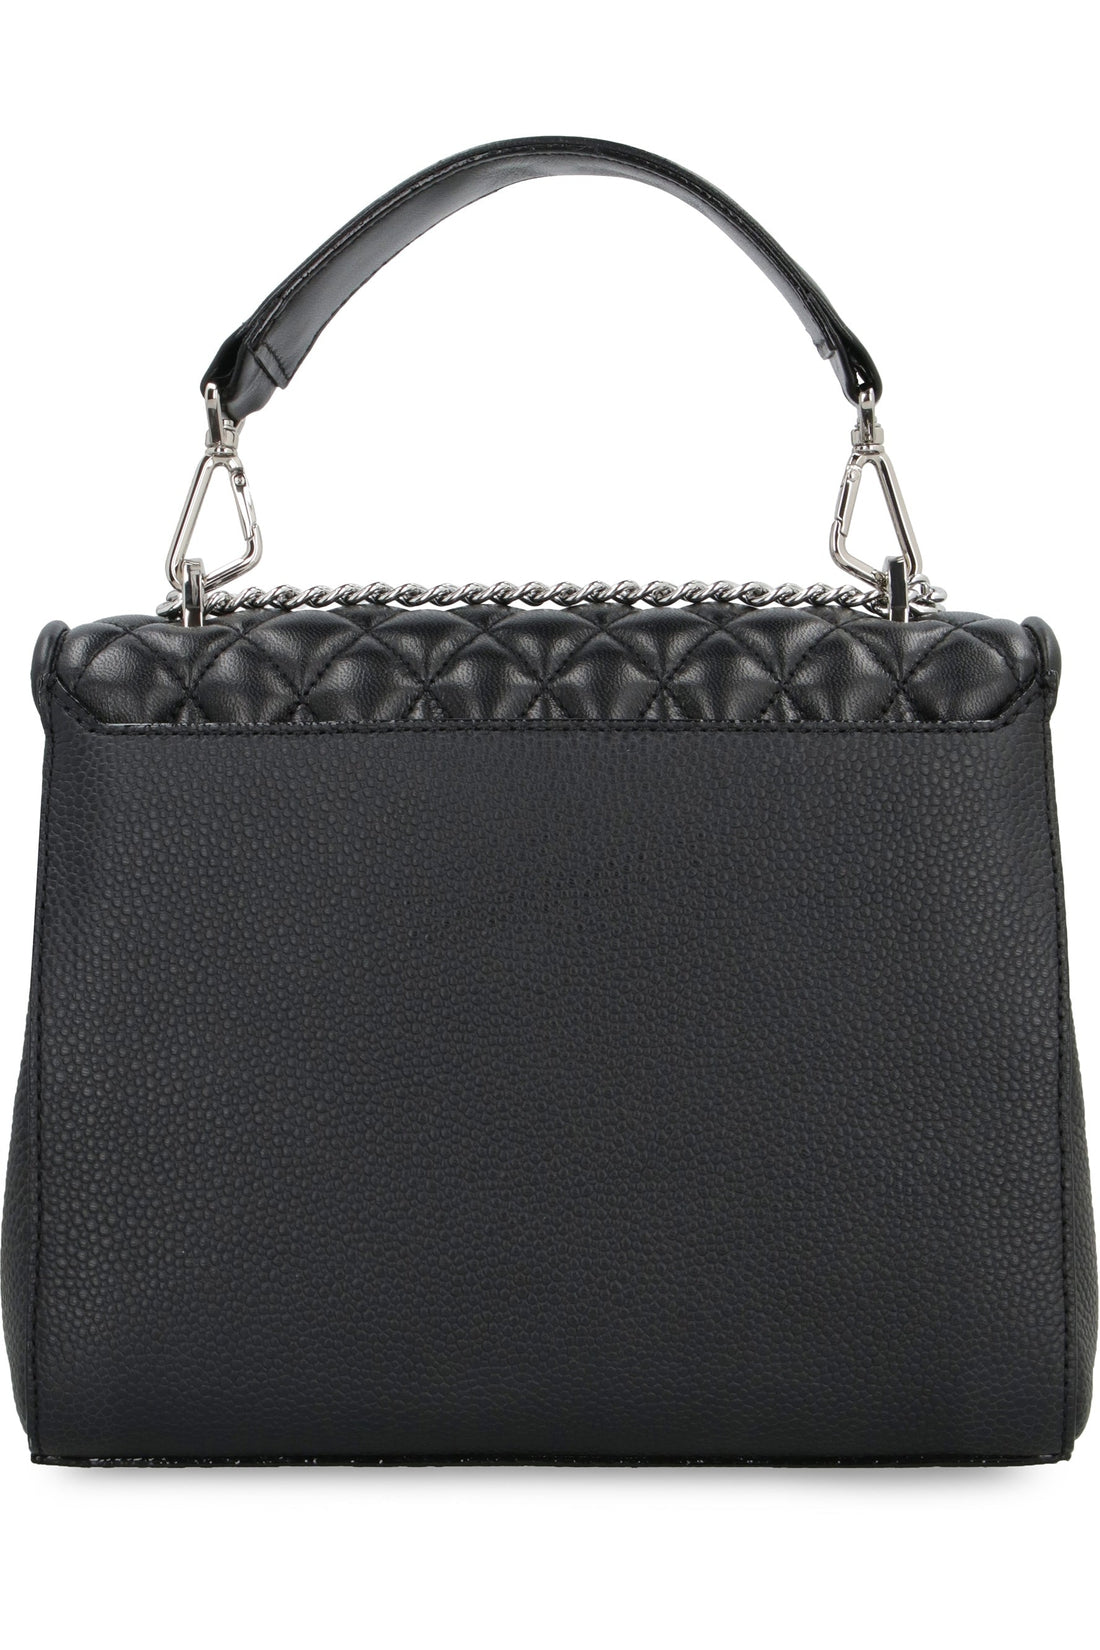 Lancel-OUTLET-SALE-Ninon quilted leather handbag-ARCHIVIST